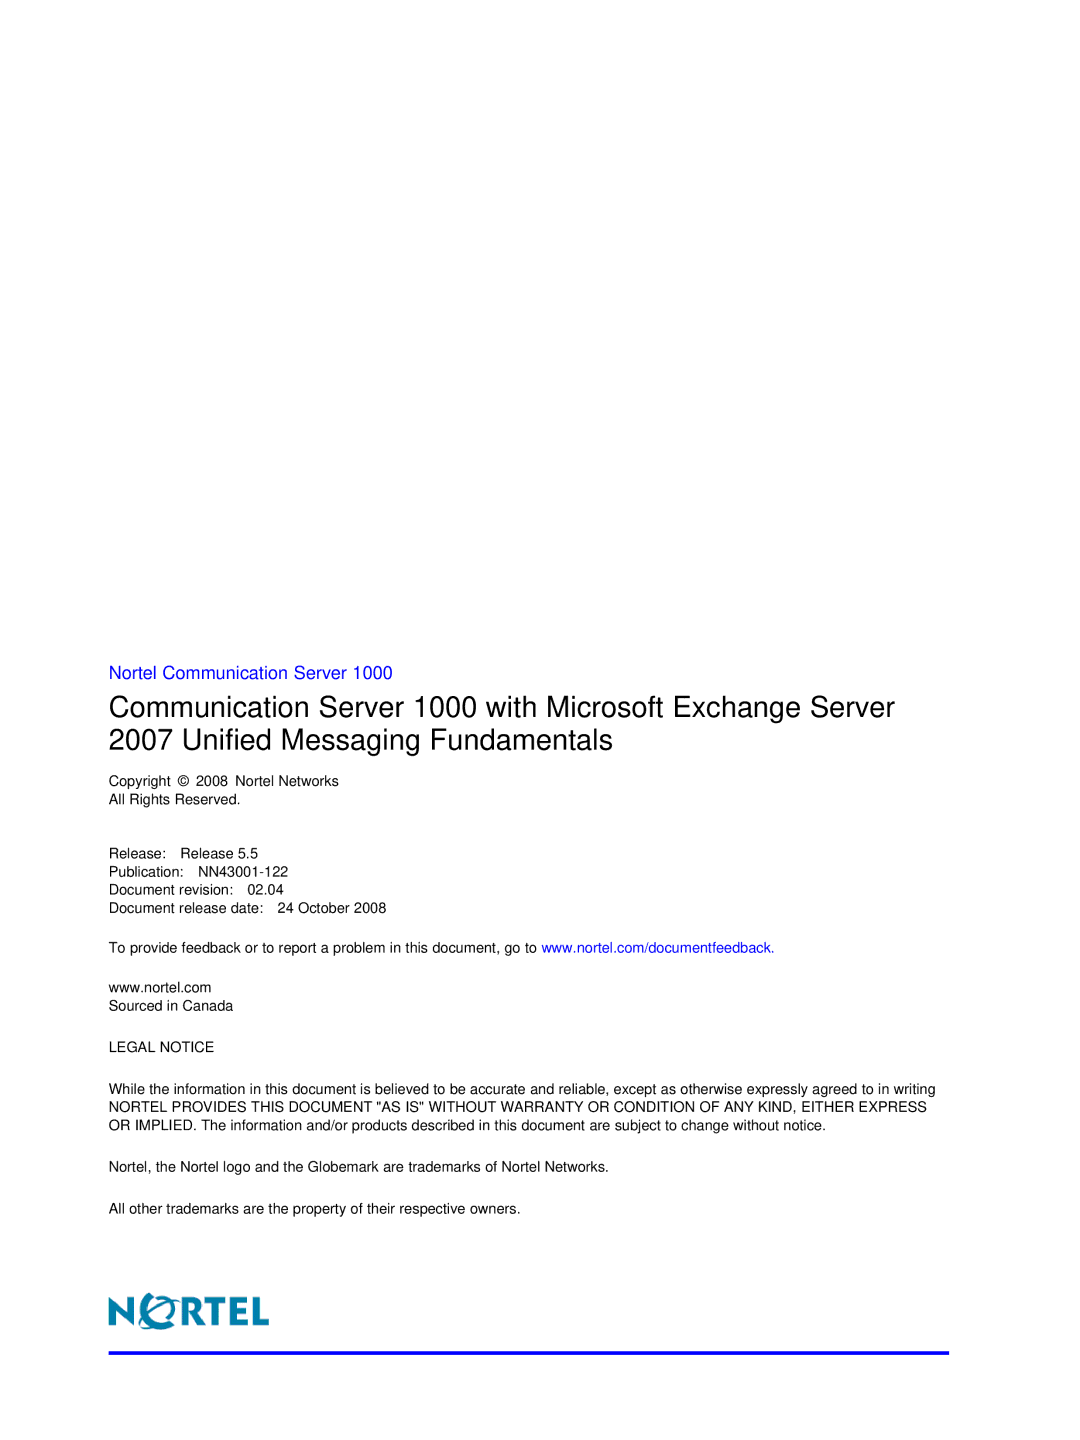 Nortel Networks NN43001-122 manual Nortel Communication Server 